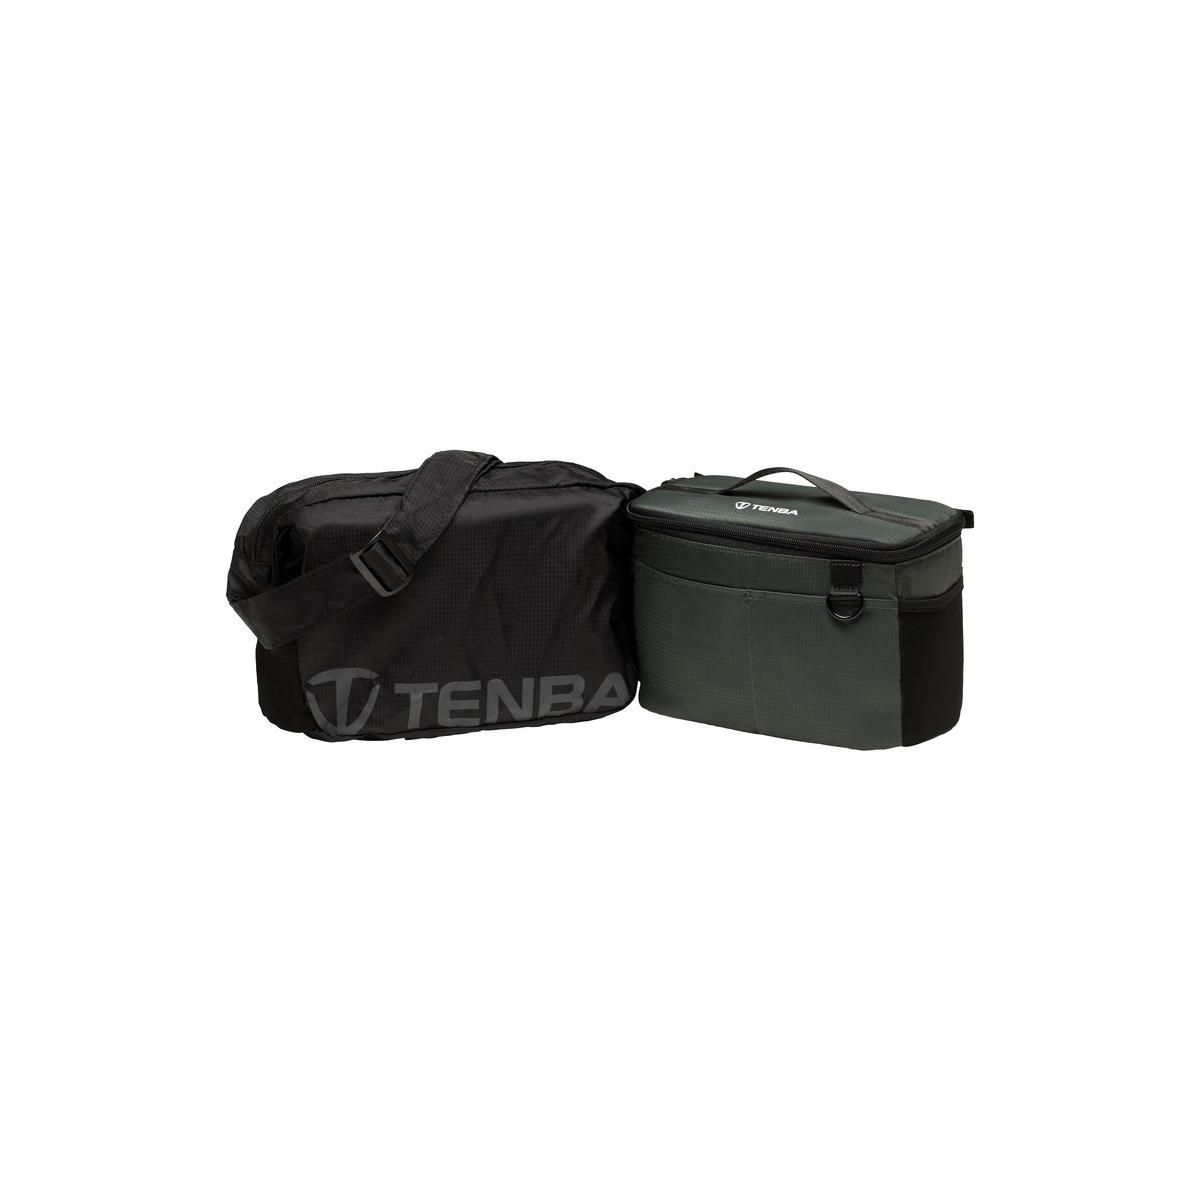 Tenba 636-282 BYOB/Packlite 9 Flatpack  Bundle with Insert and Packlite Bag (Black and Gray)